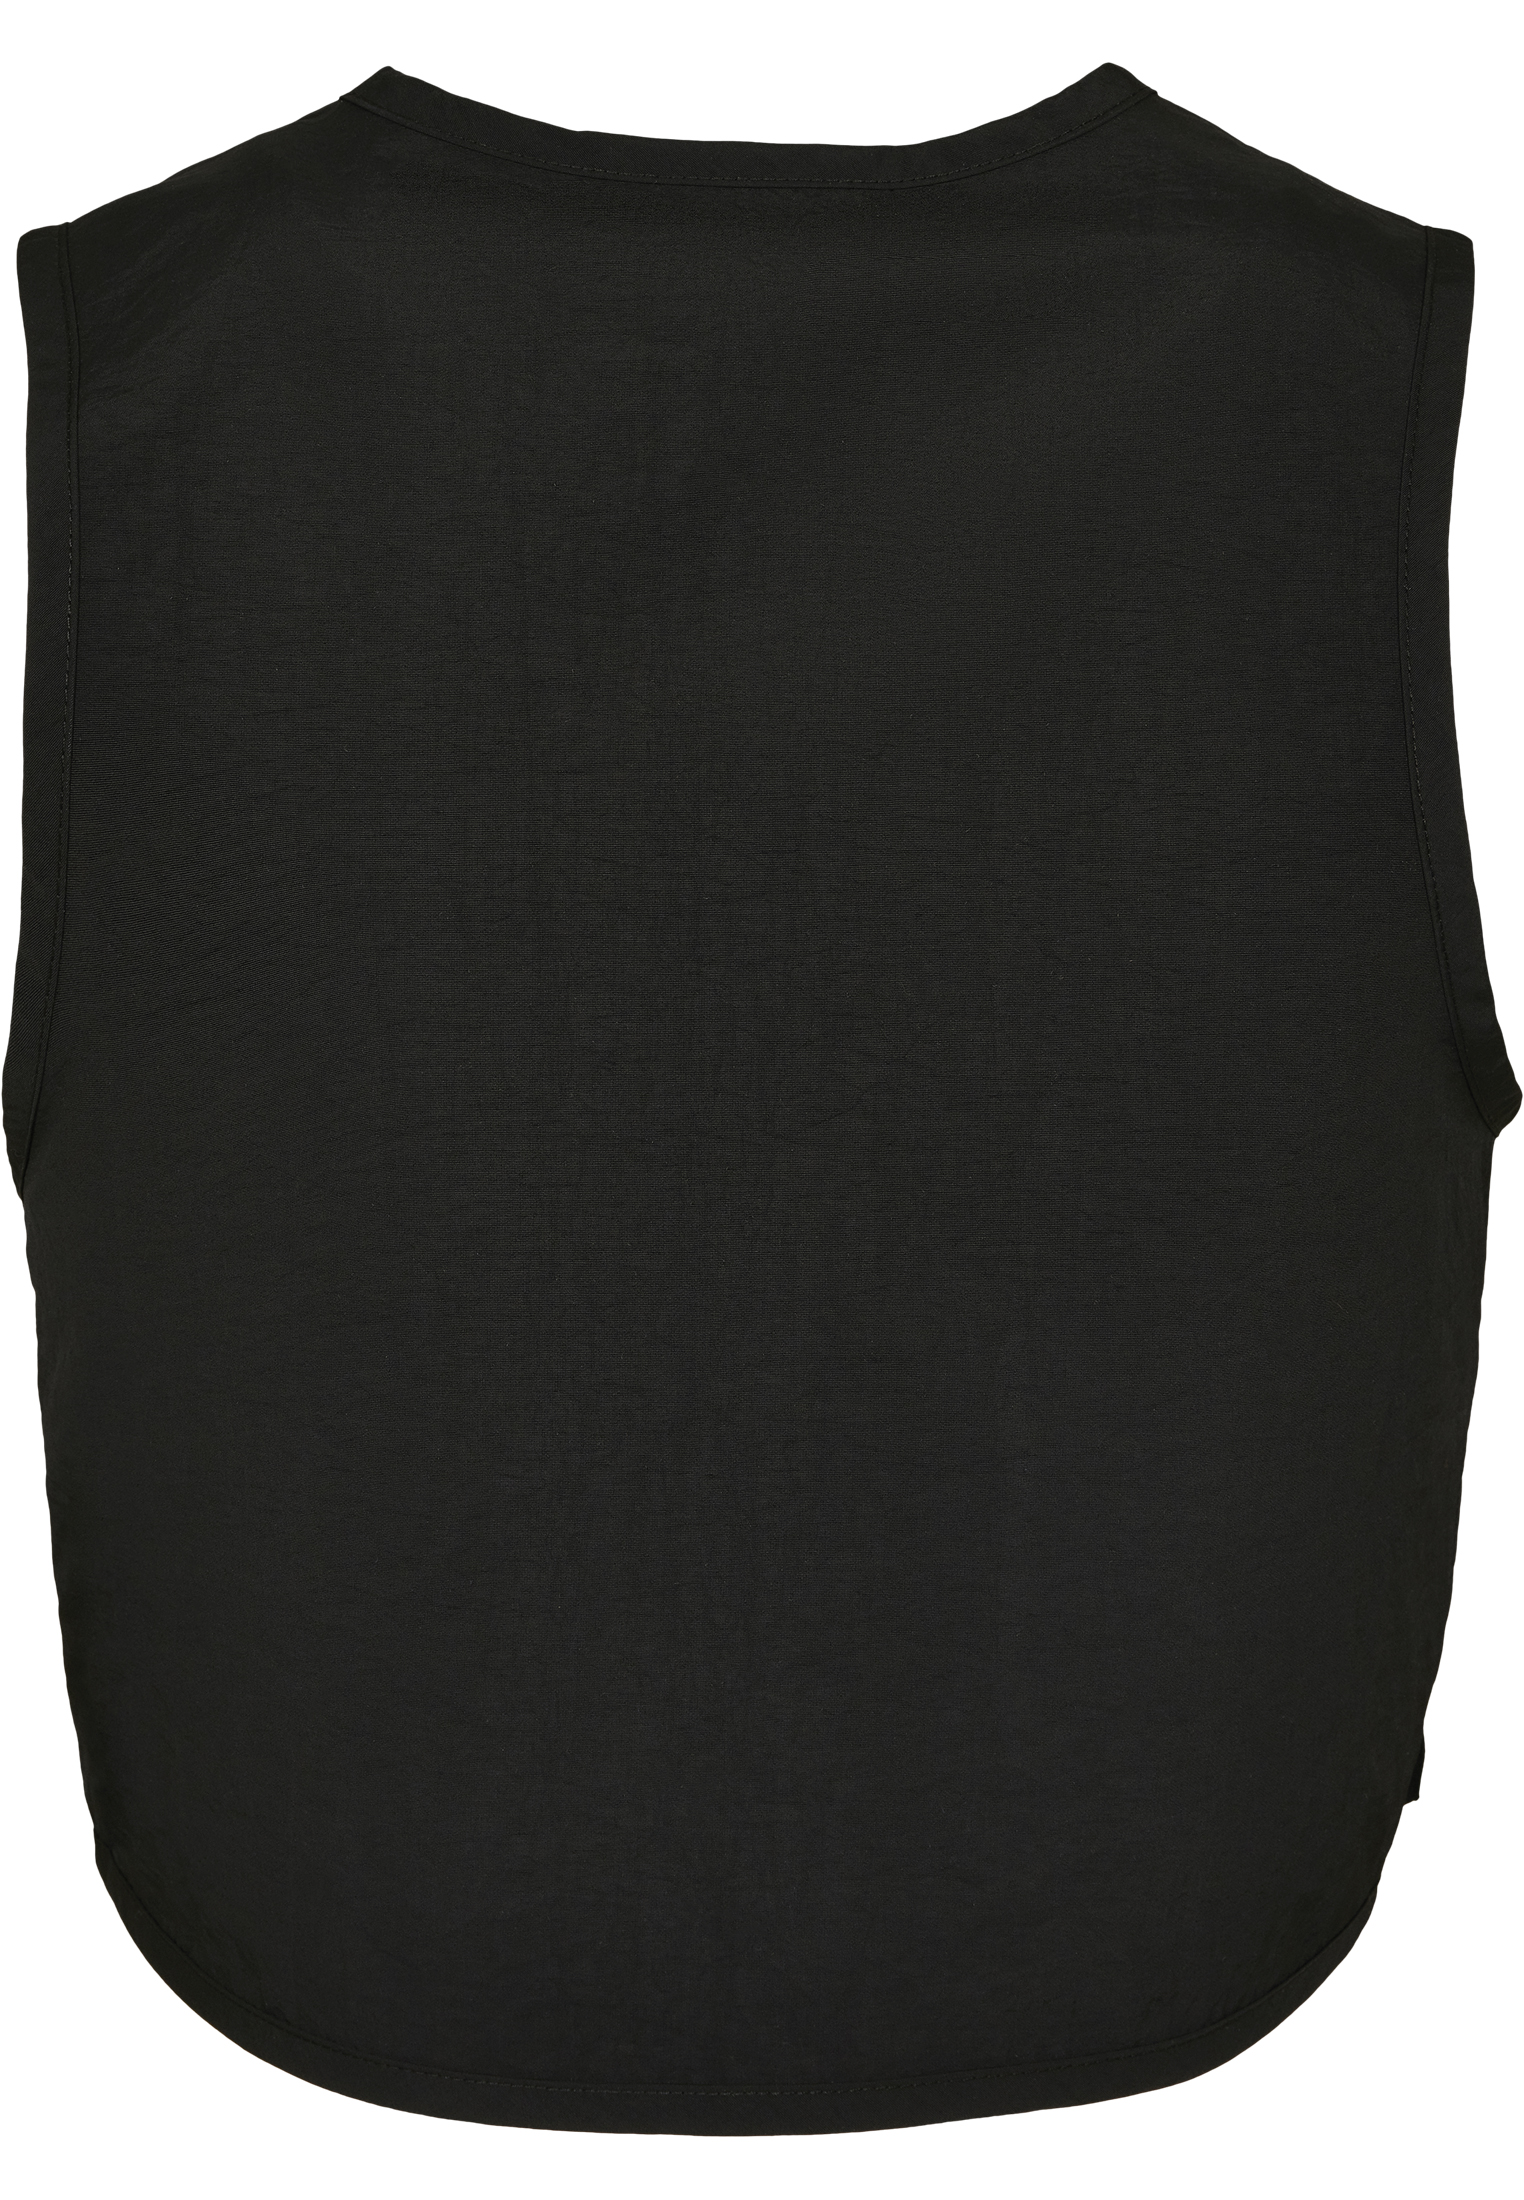 Curvy Ladies Short Tactical Vest in Farbe black